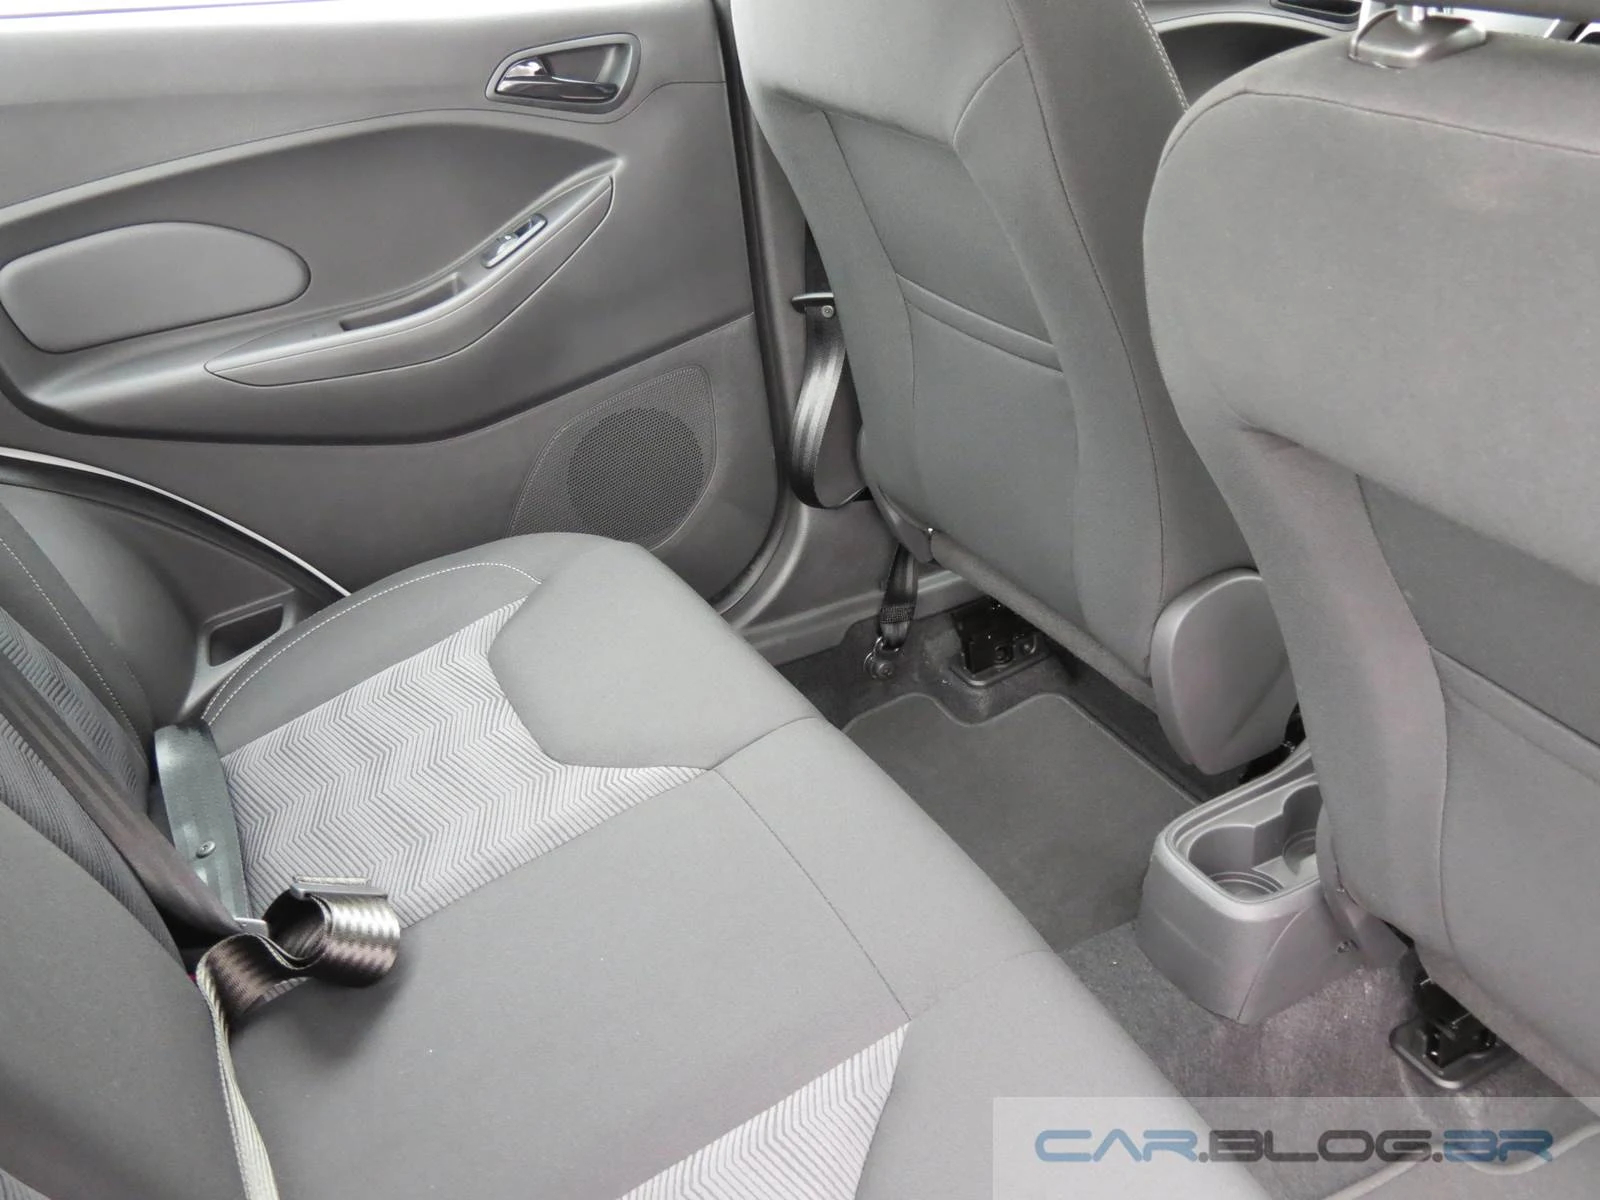 Novo Ford Ka+ Sedan - interior